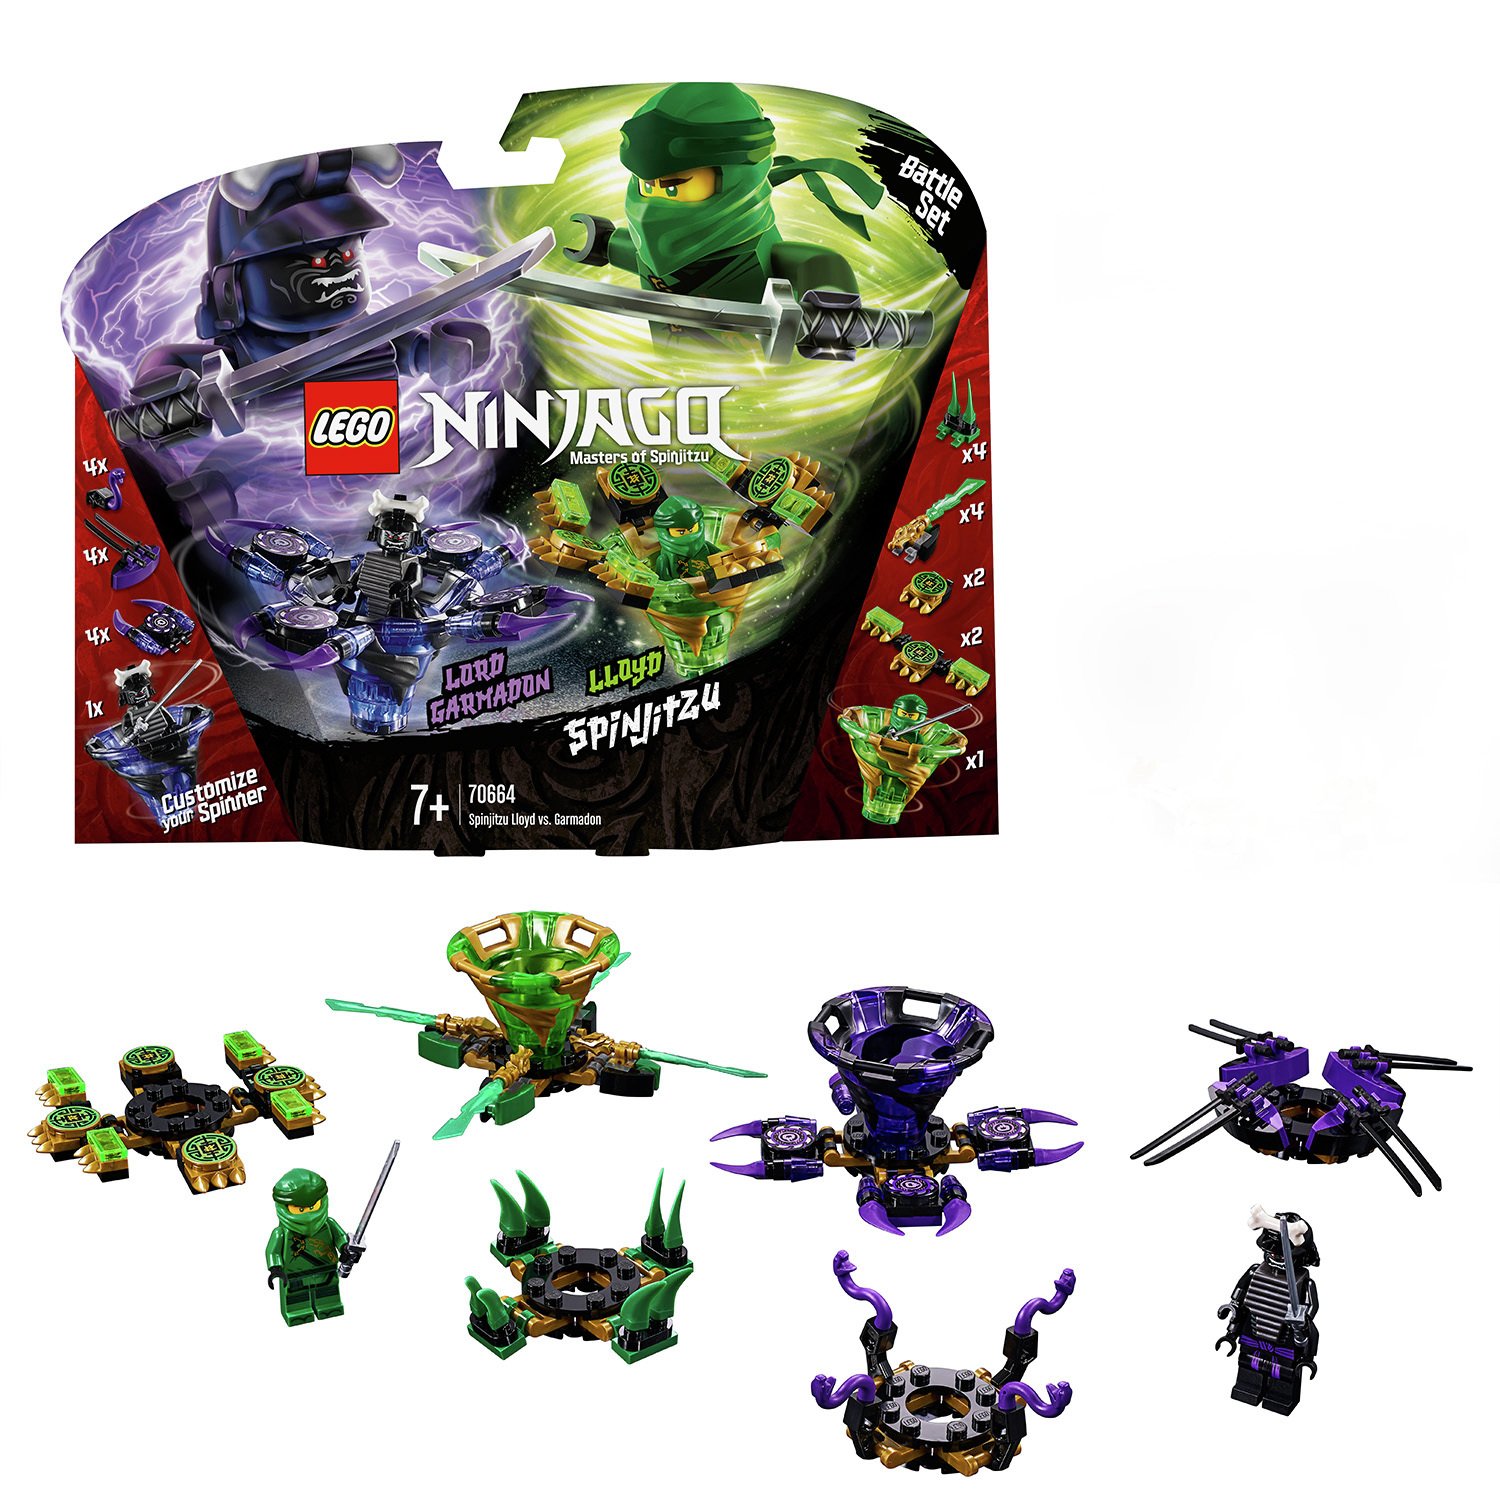 LEGO Ninjago Spinjitzu Lloyd vs Garmado Toy Spinners - 70664